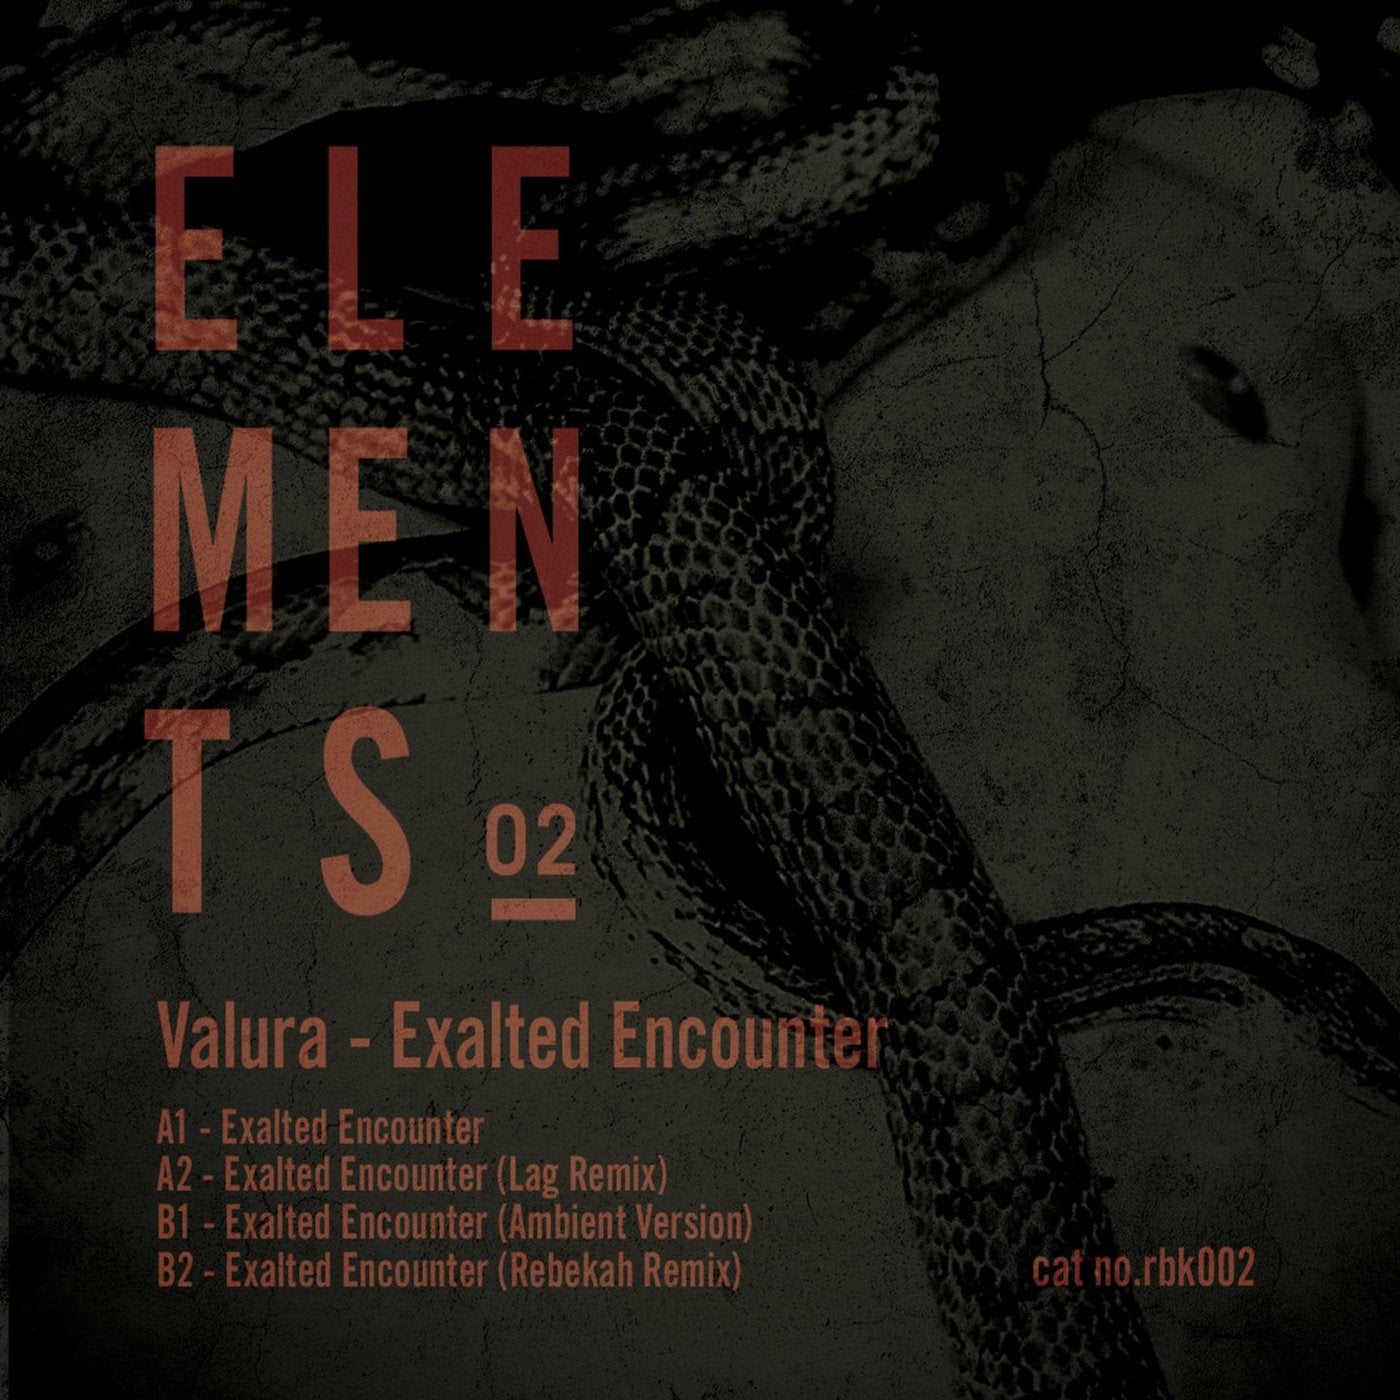 Exalted Encounter EP